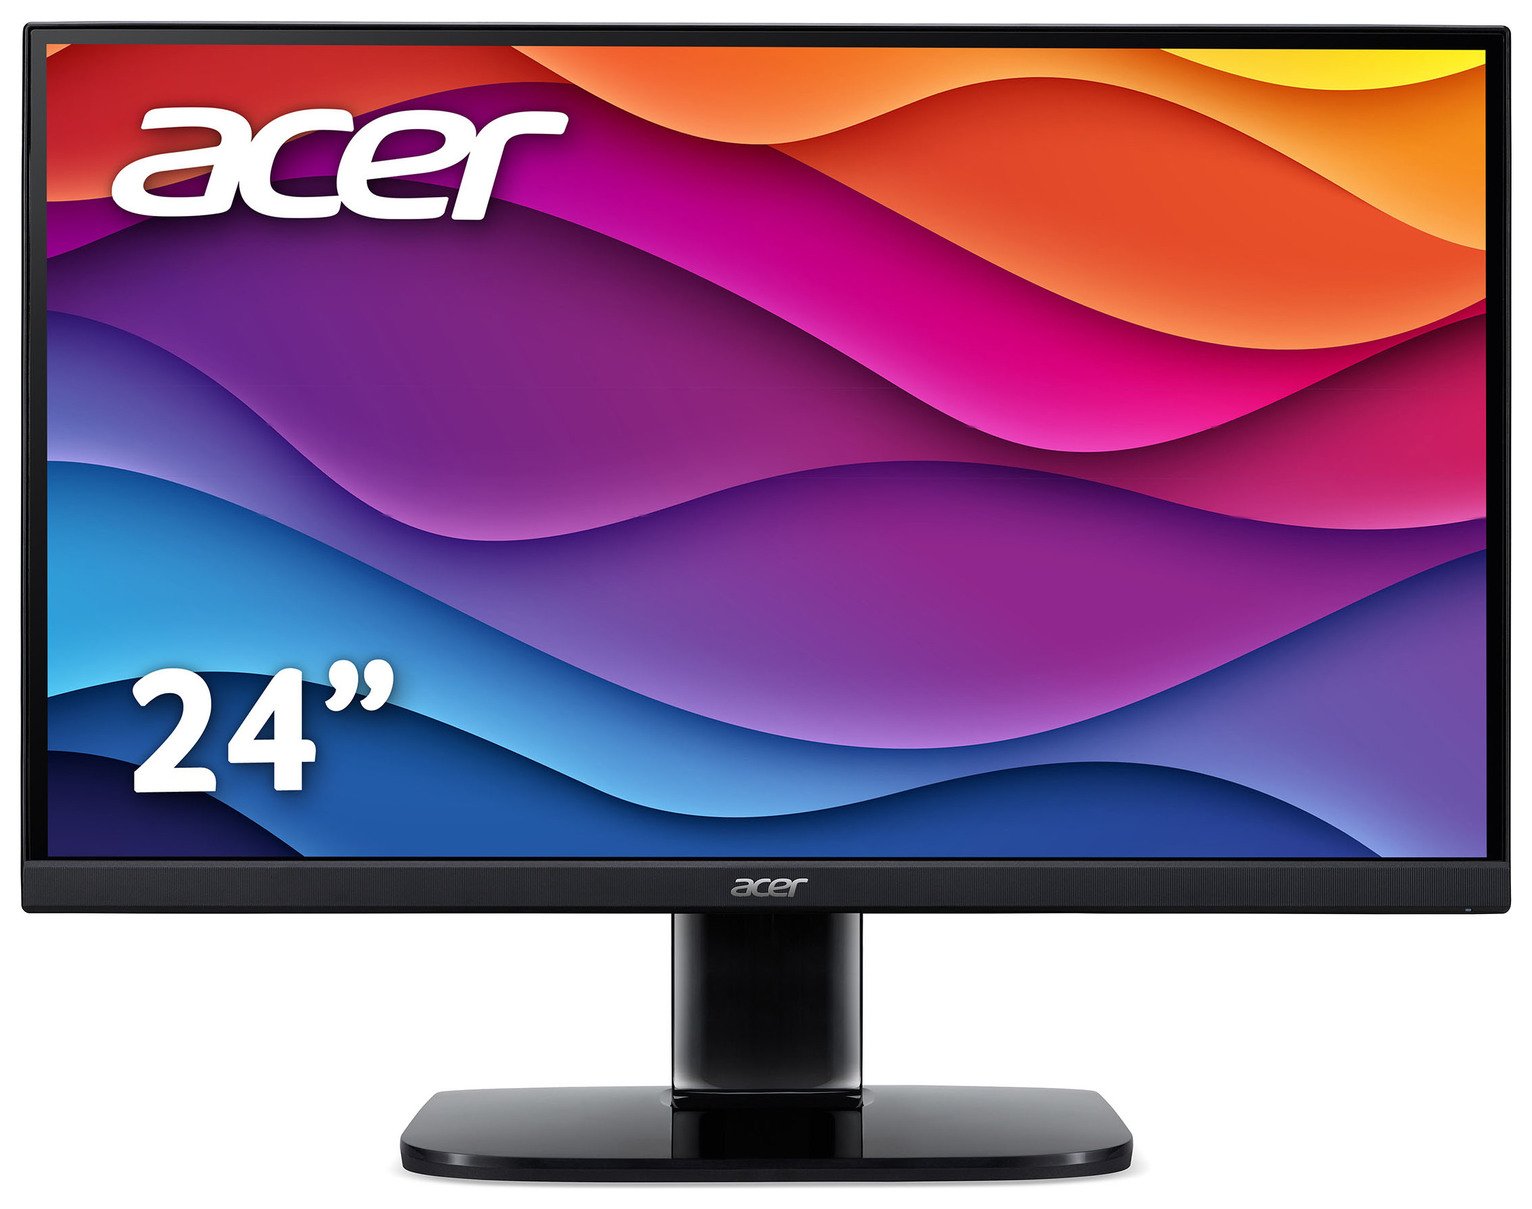 Acer KA242YE 23.8in 100Hz IPS FHD Monitor